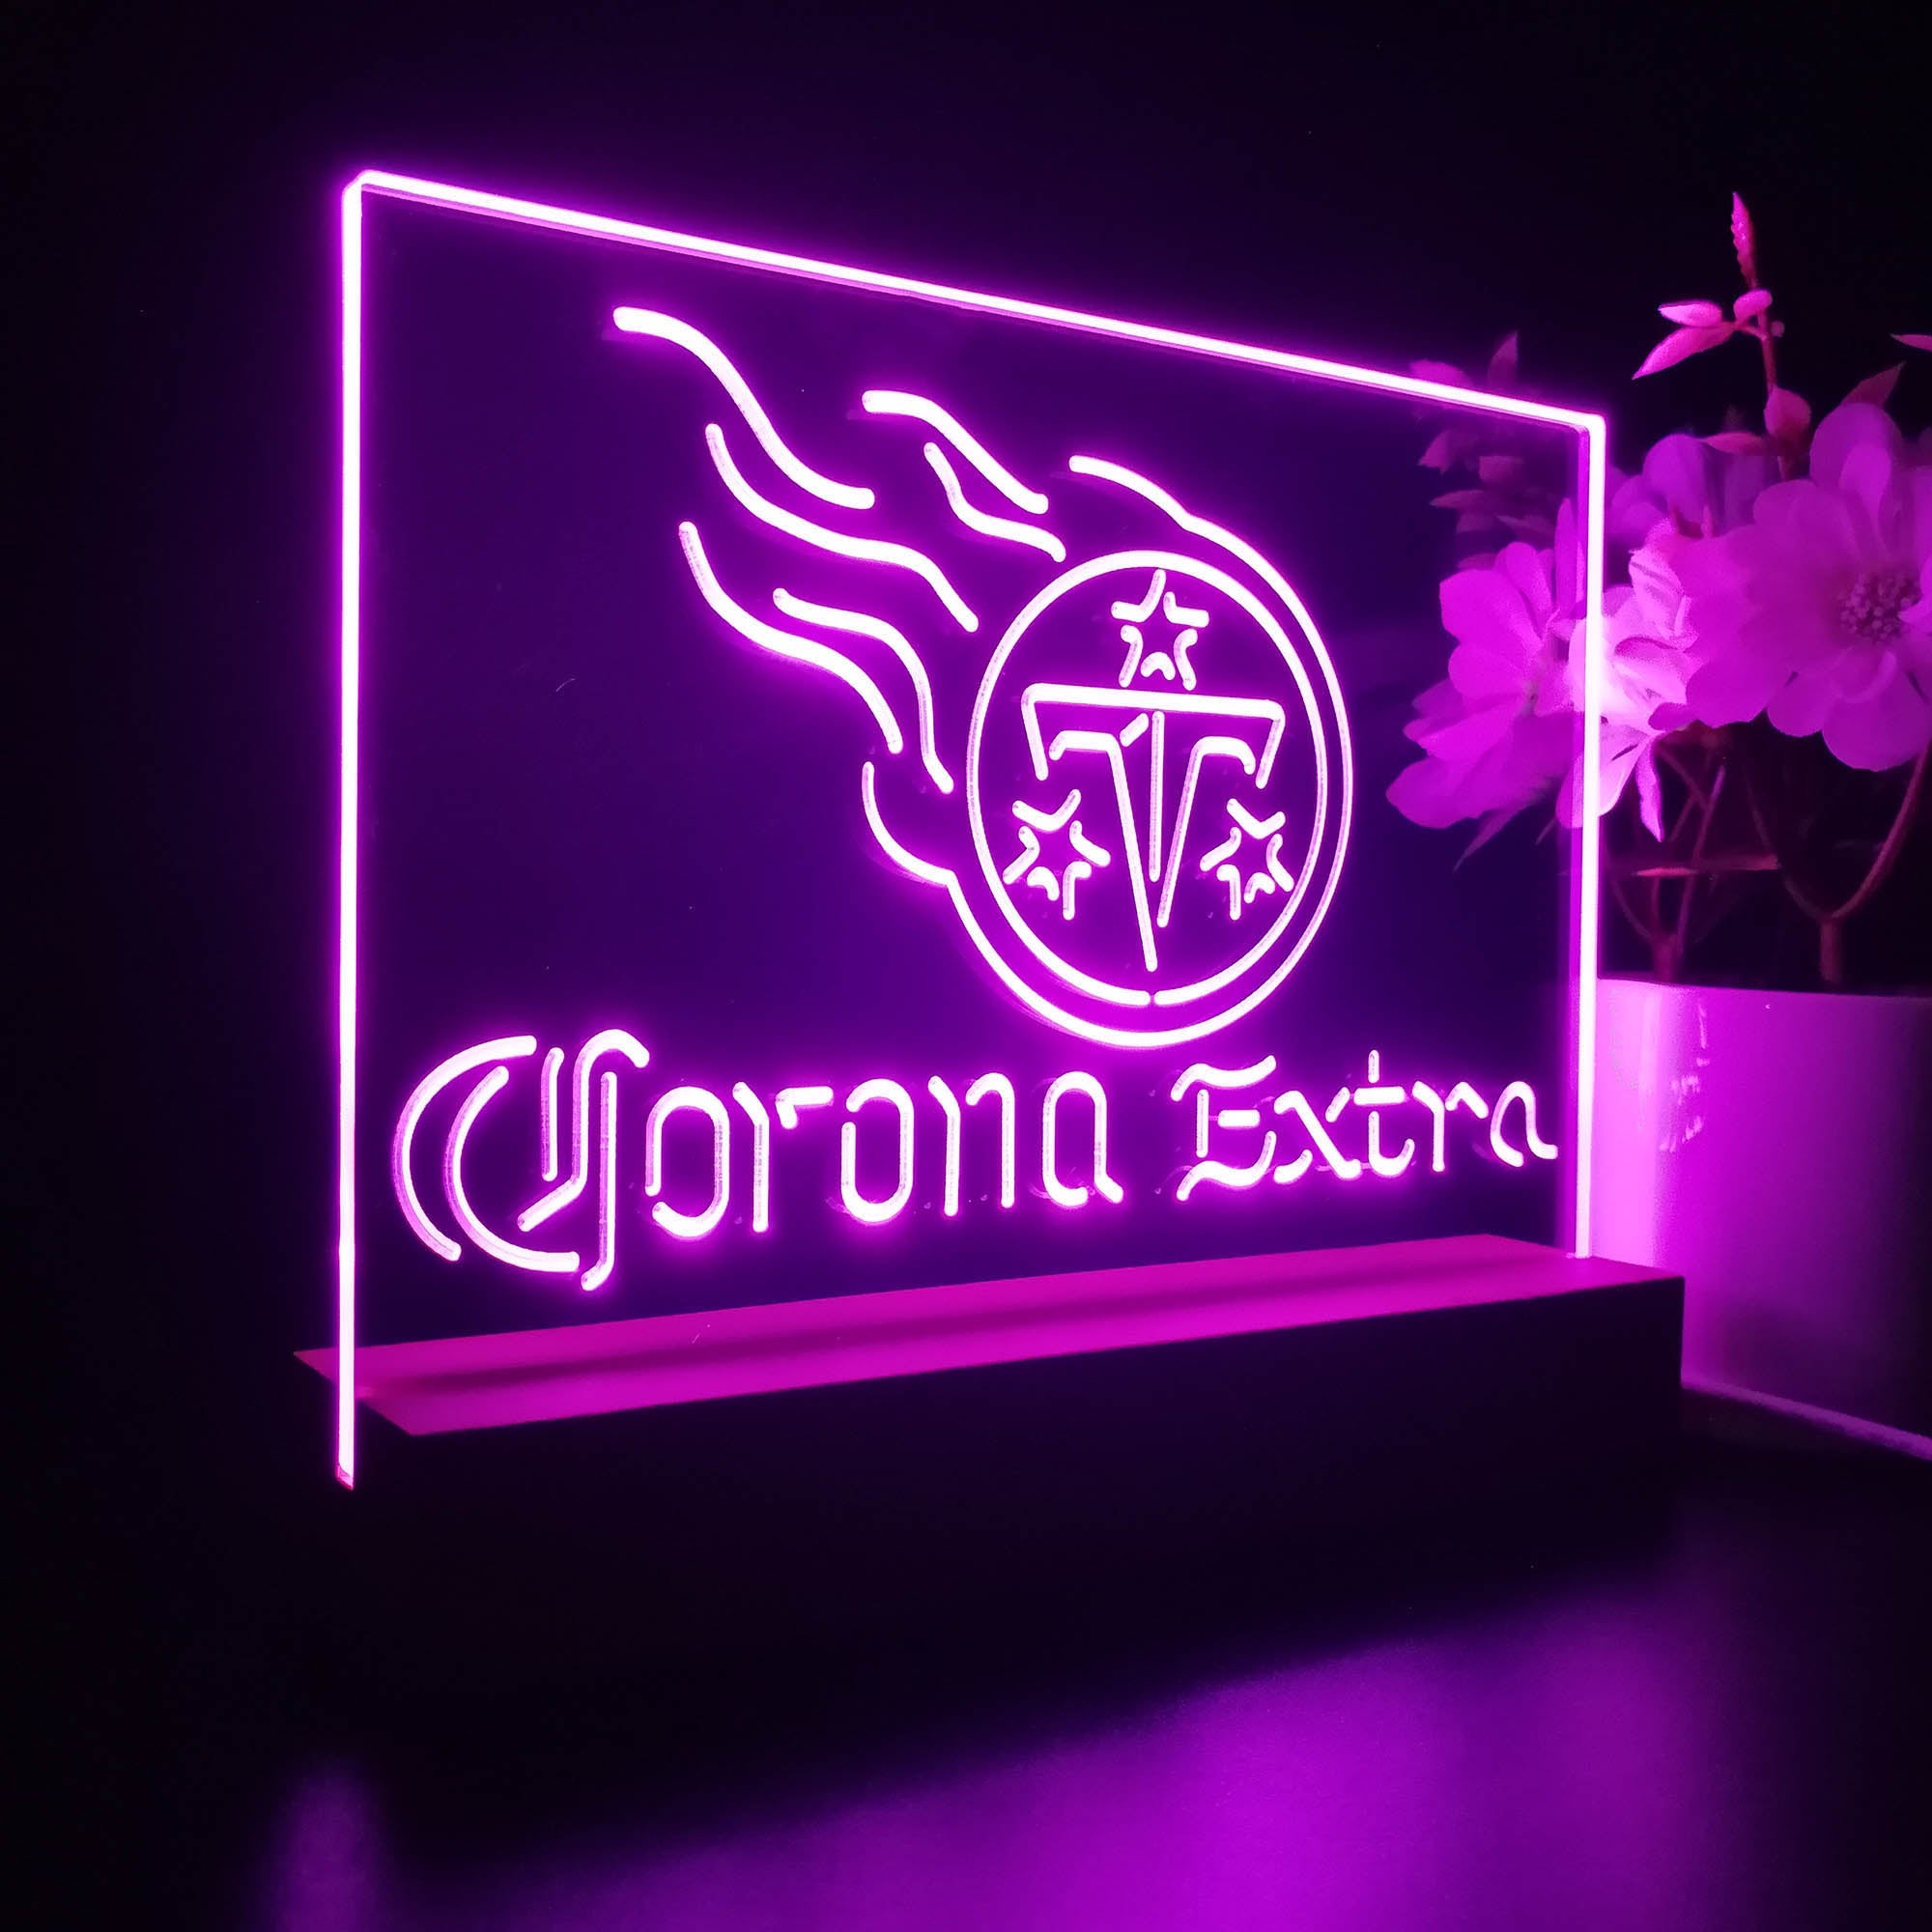 Corona Extra Bar Tennessee Titans Est. 1960 Night Light Pub Bar Lamp